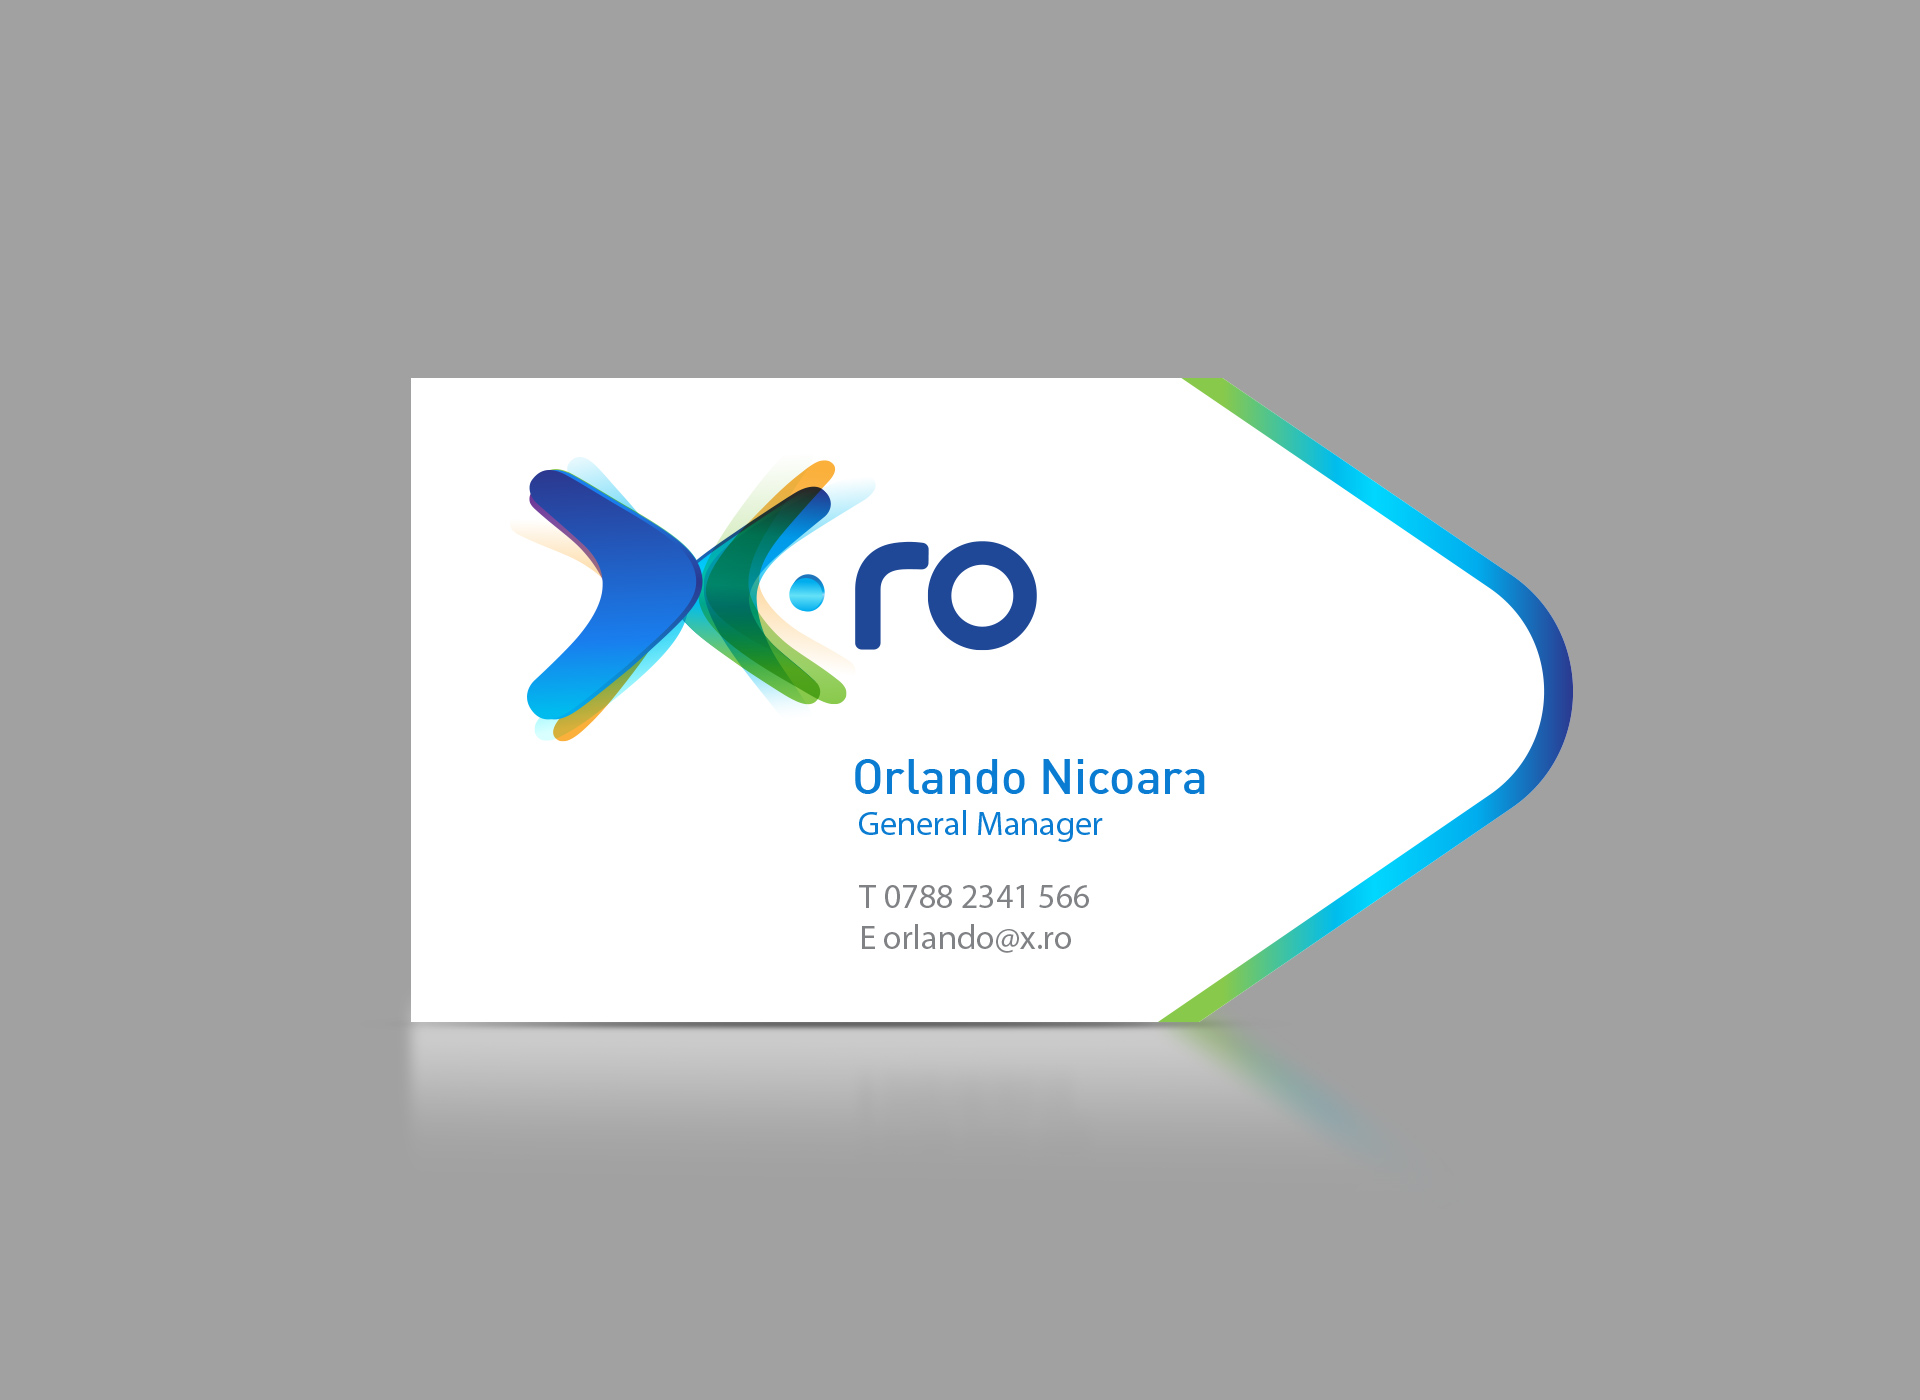 X.ro portfolio inoveo business card